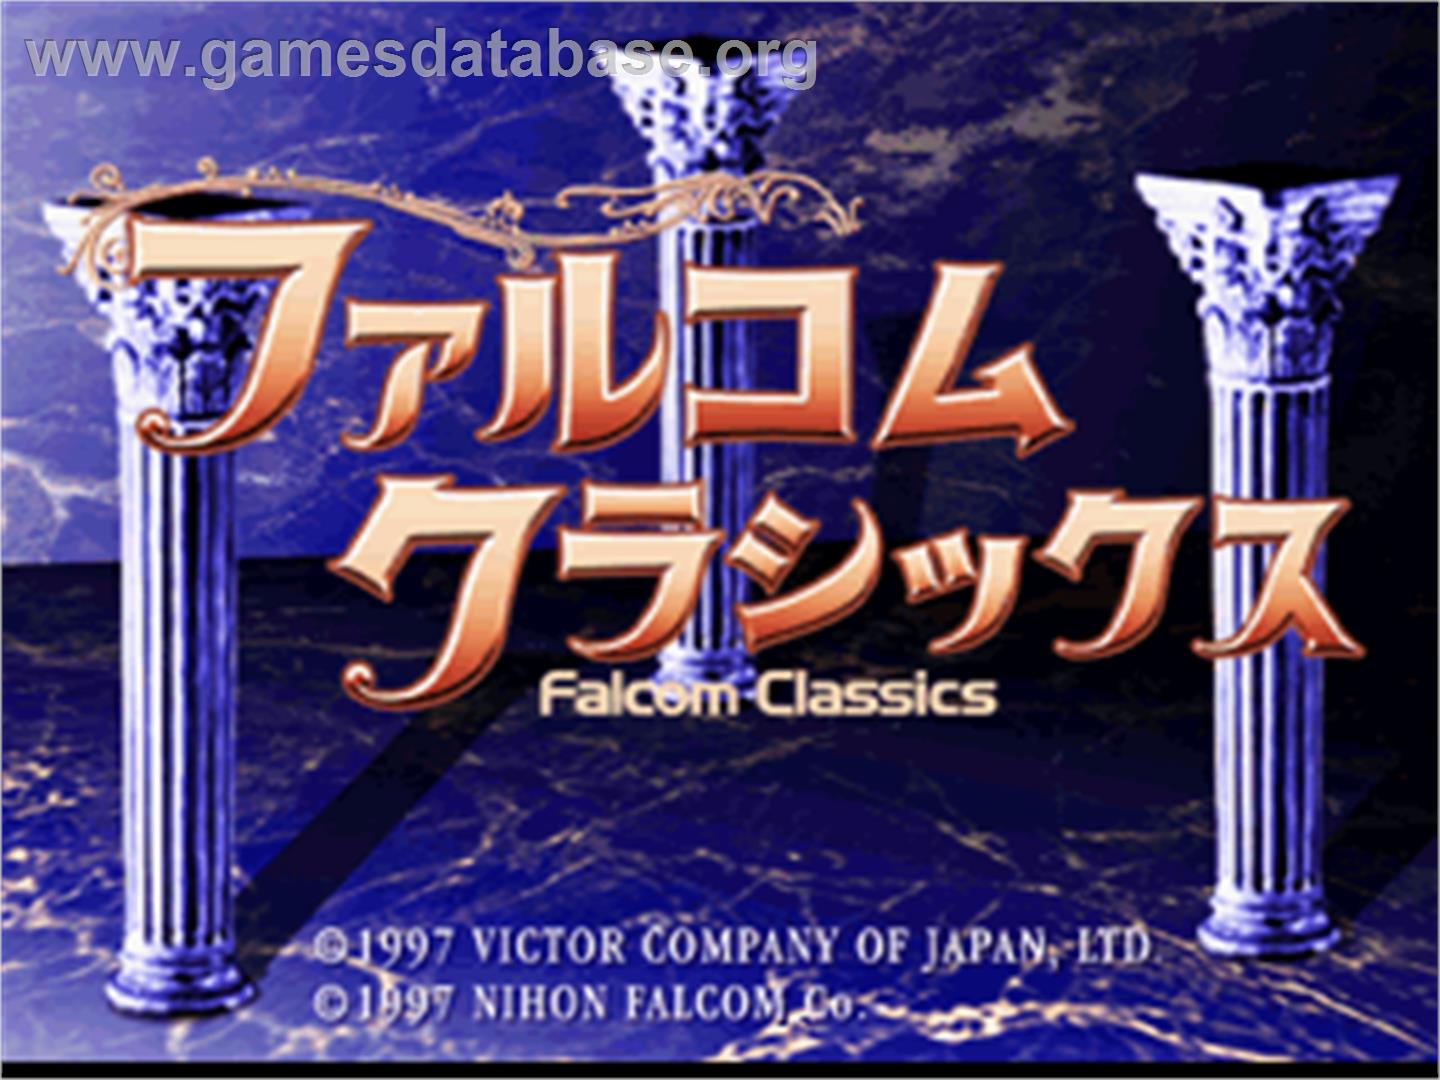 Falcom Classics - Sega Saturn - Artwork - Title Screen